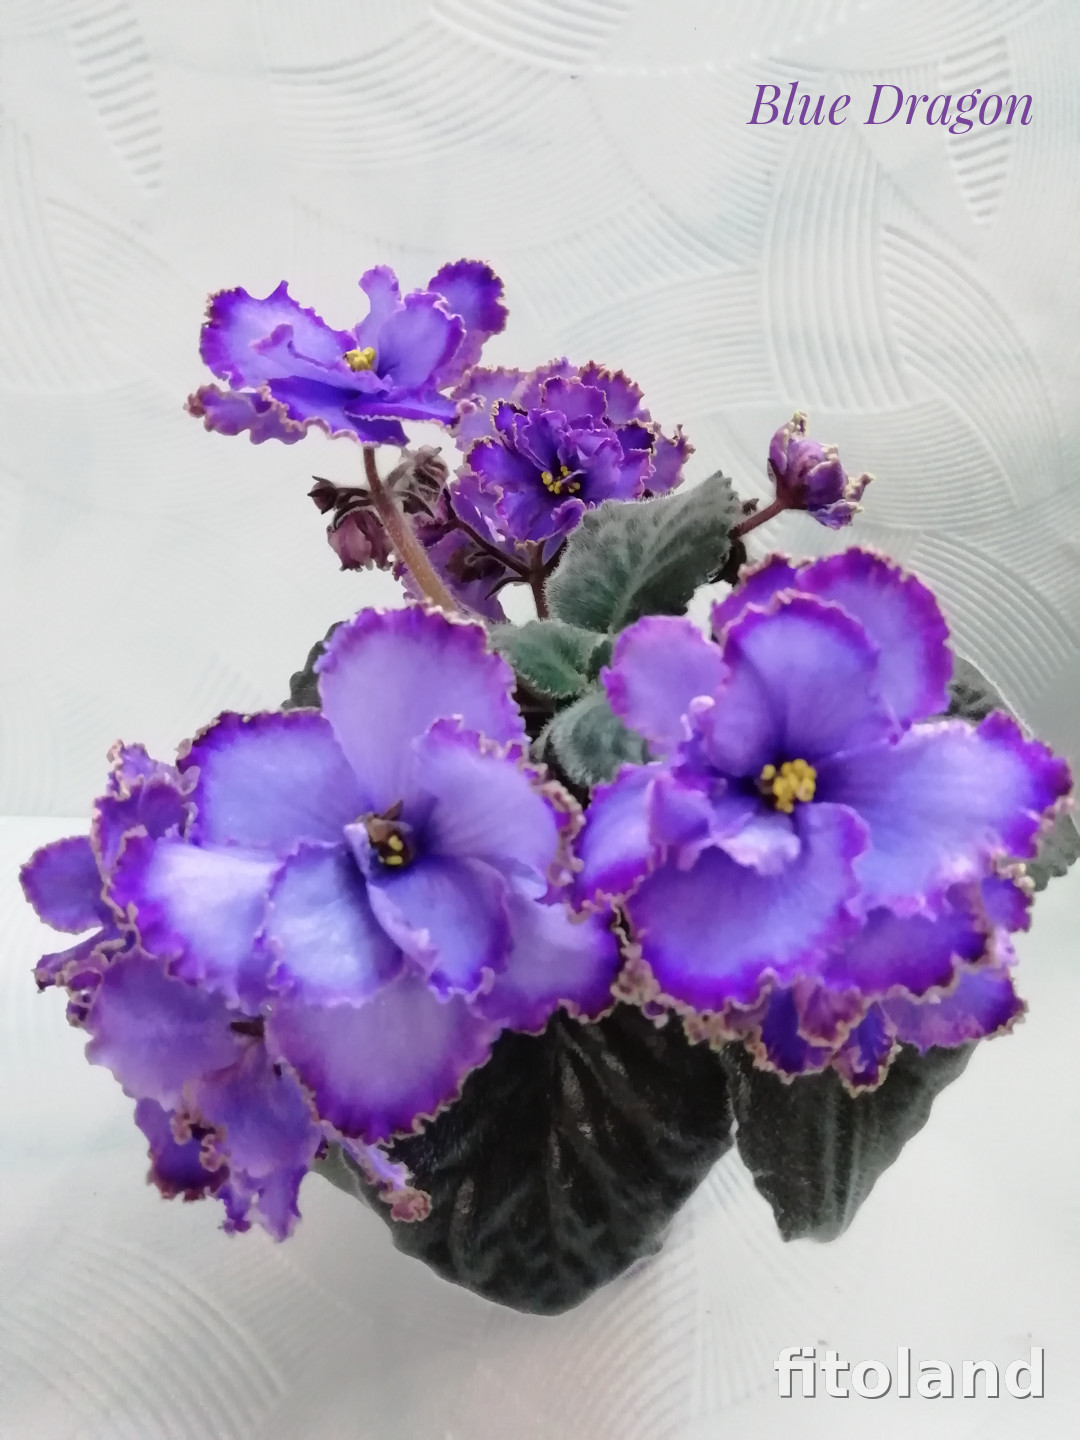 Violet Blue Dragon, photo